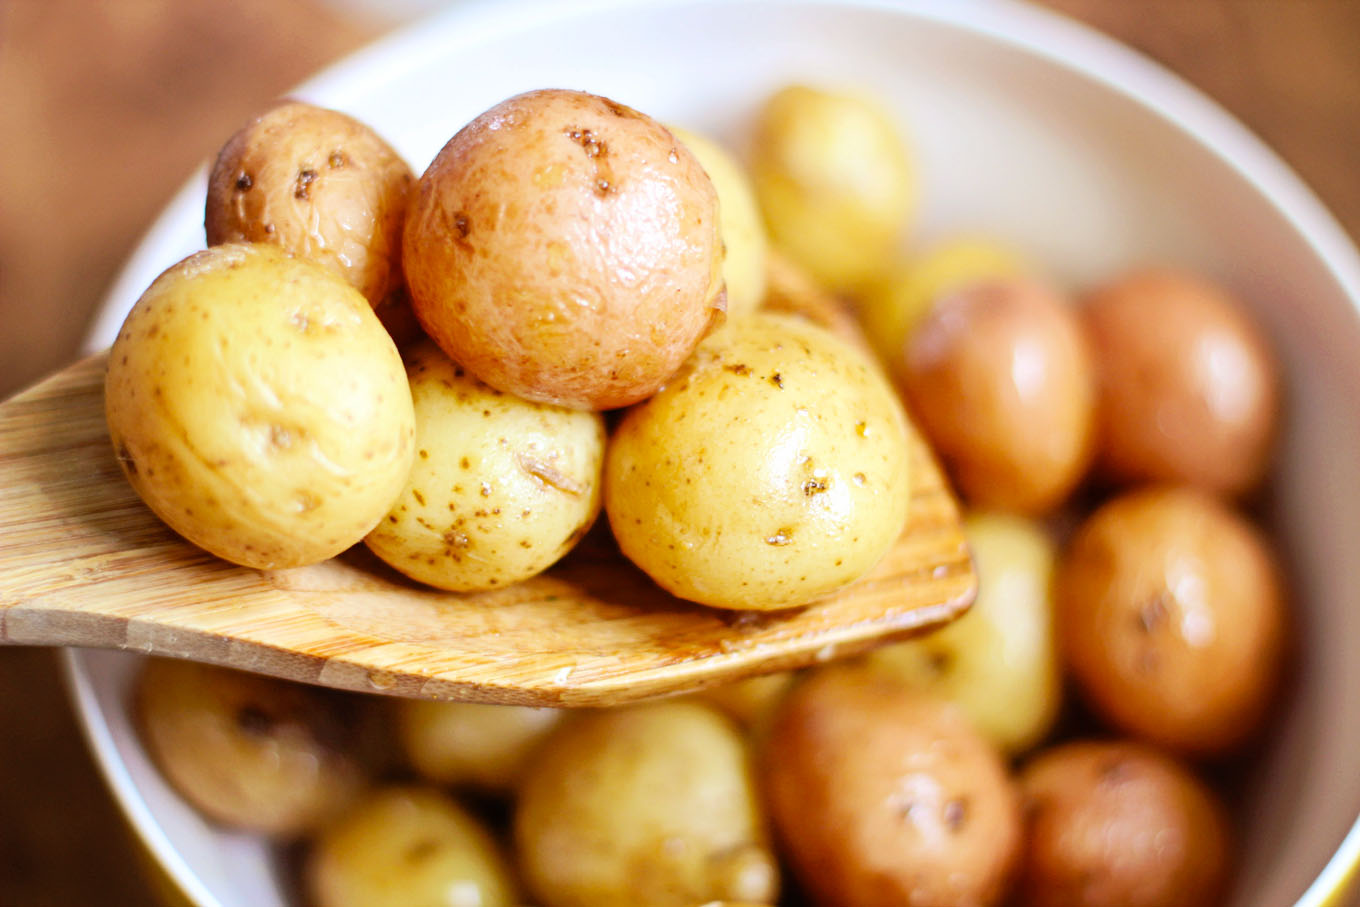 baby potatoes